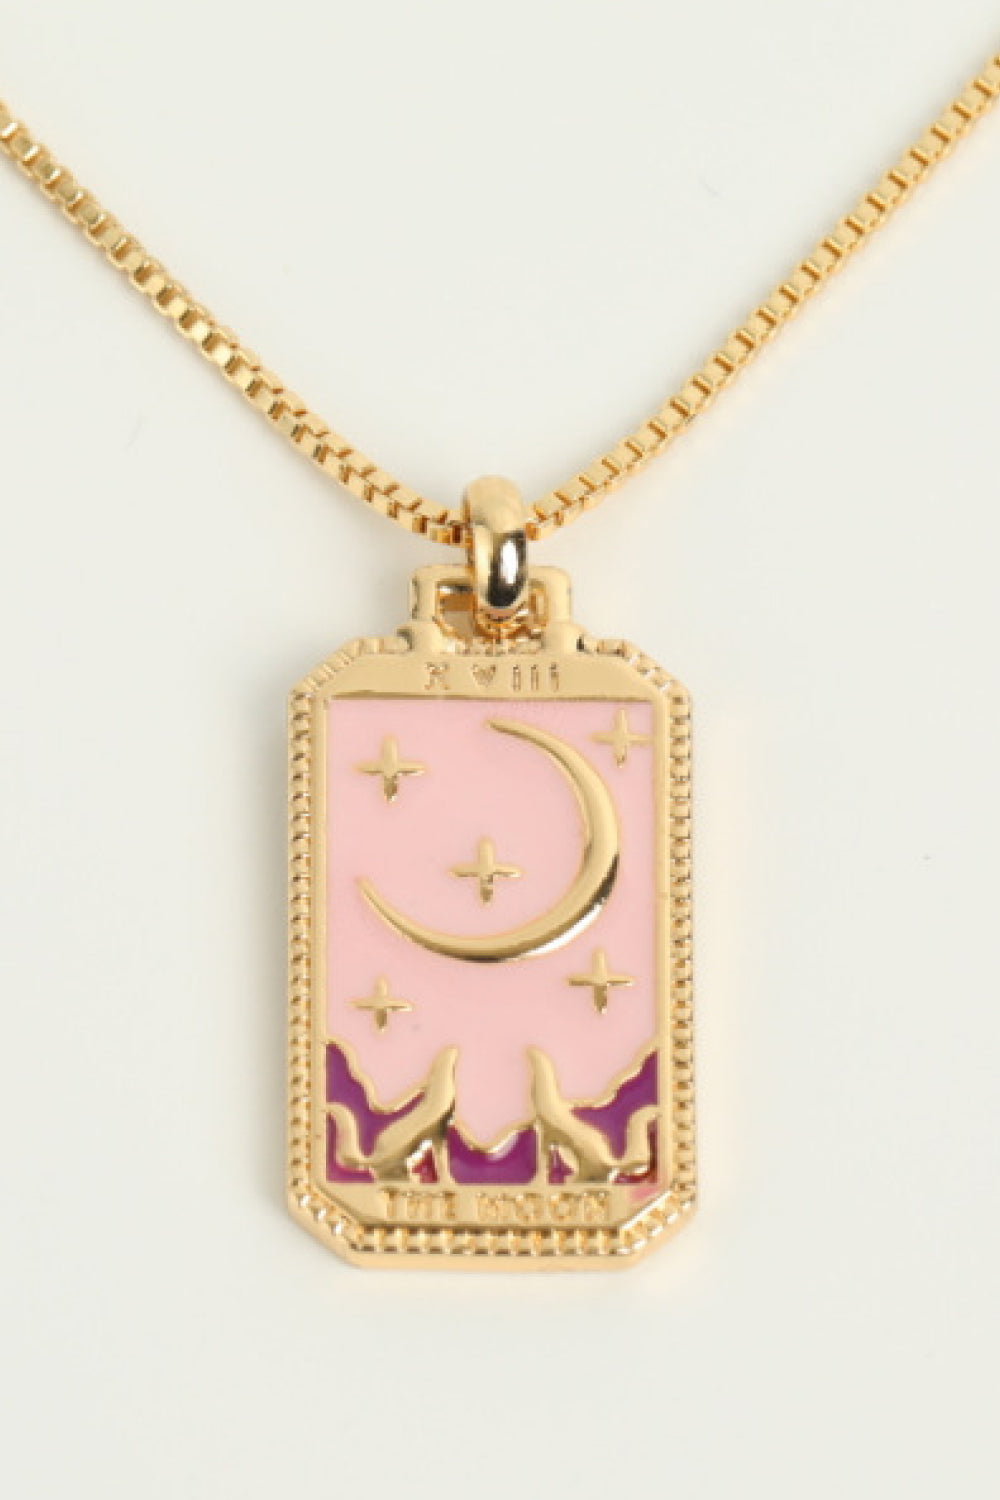 Tarot Card Pendant Copper Necklace - FunkyPeacockStore (Store description)